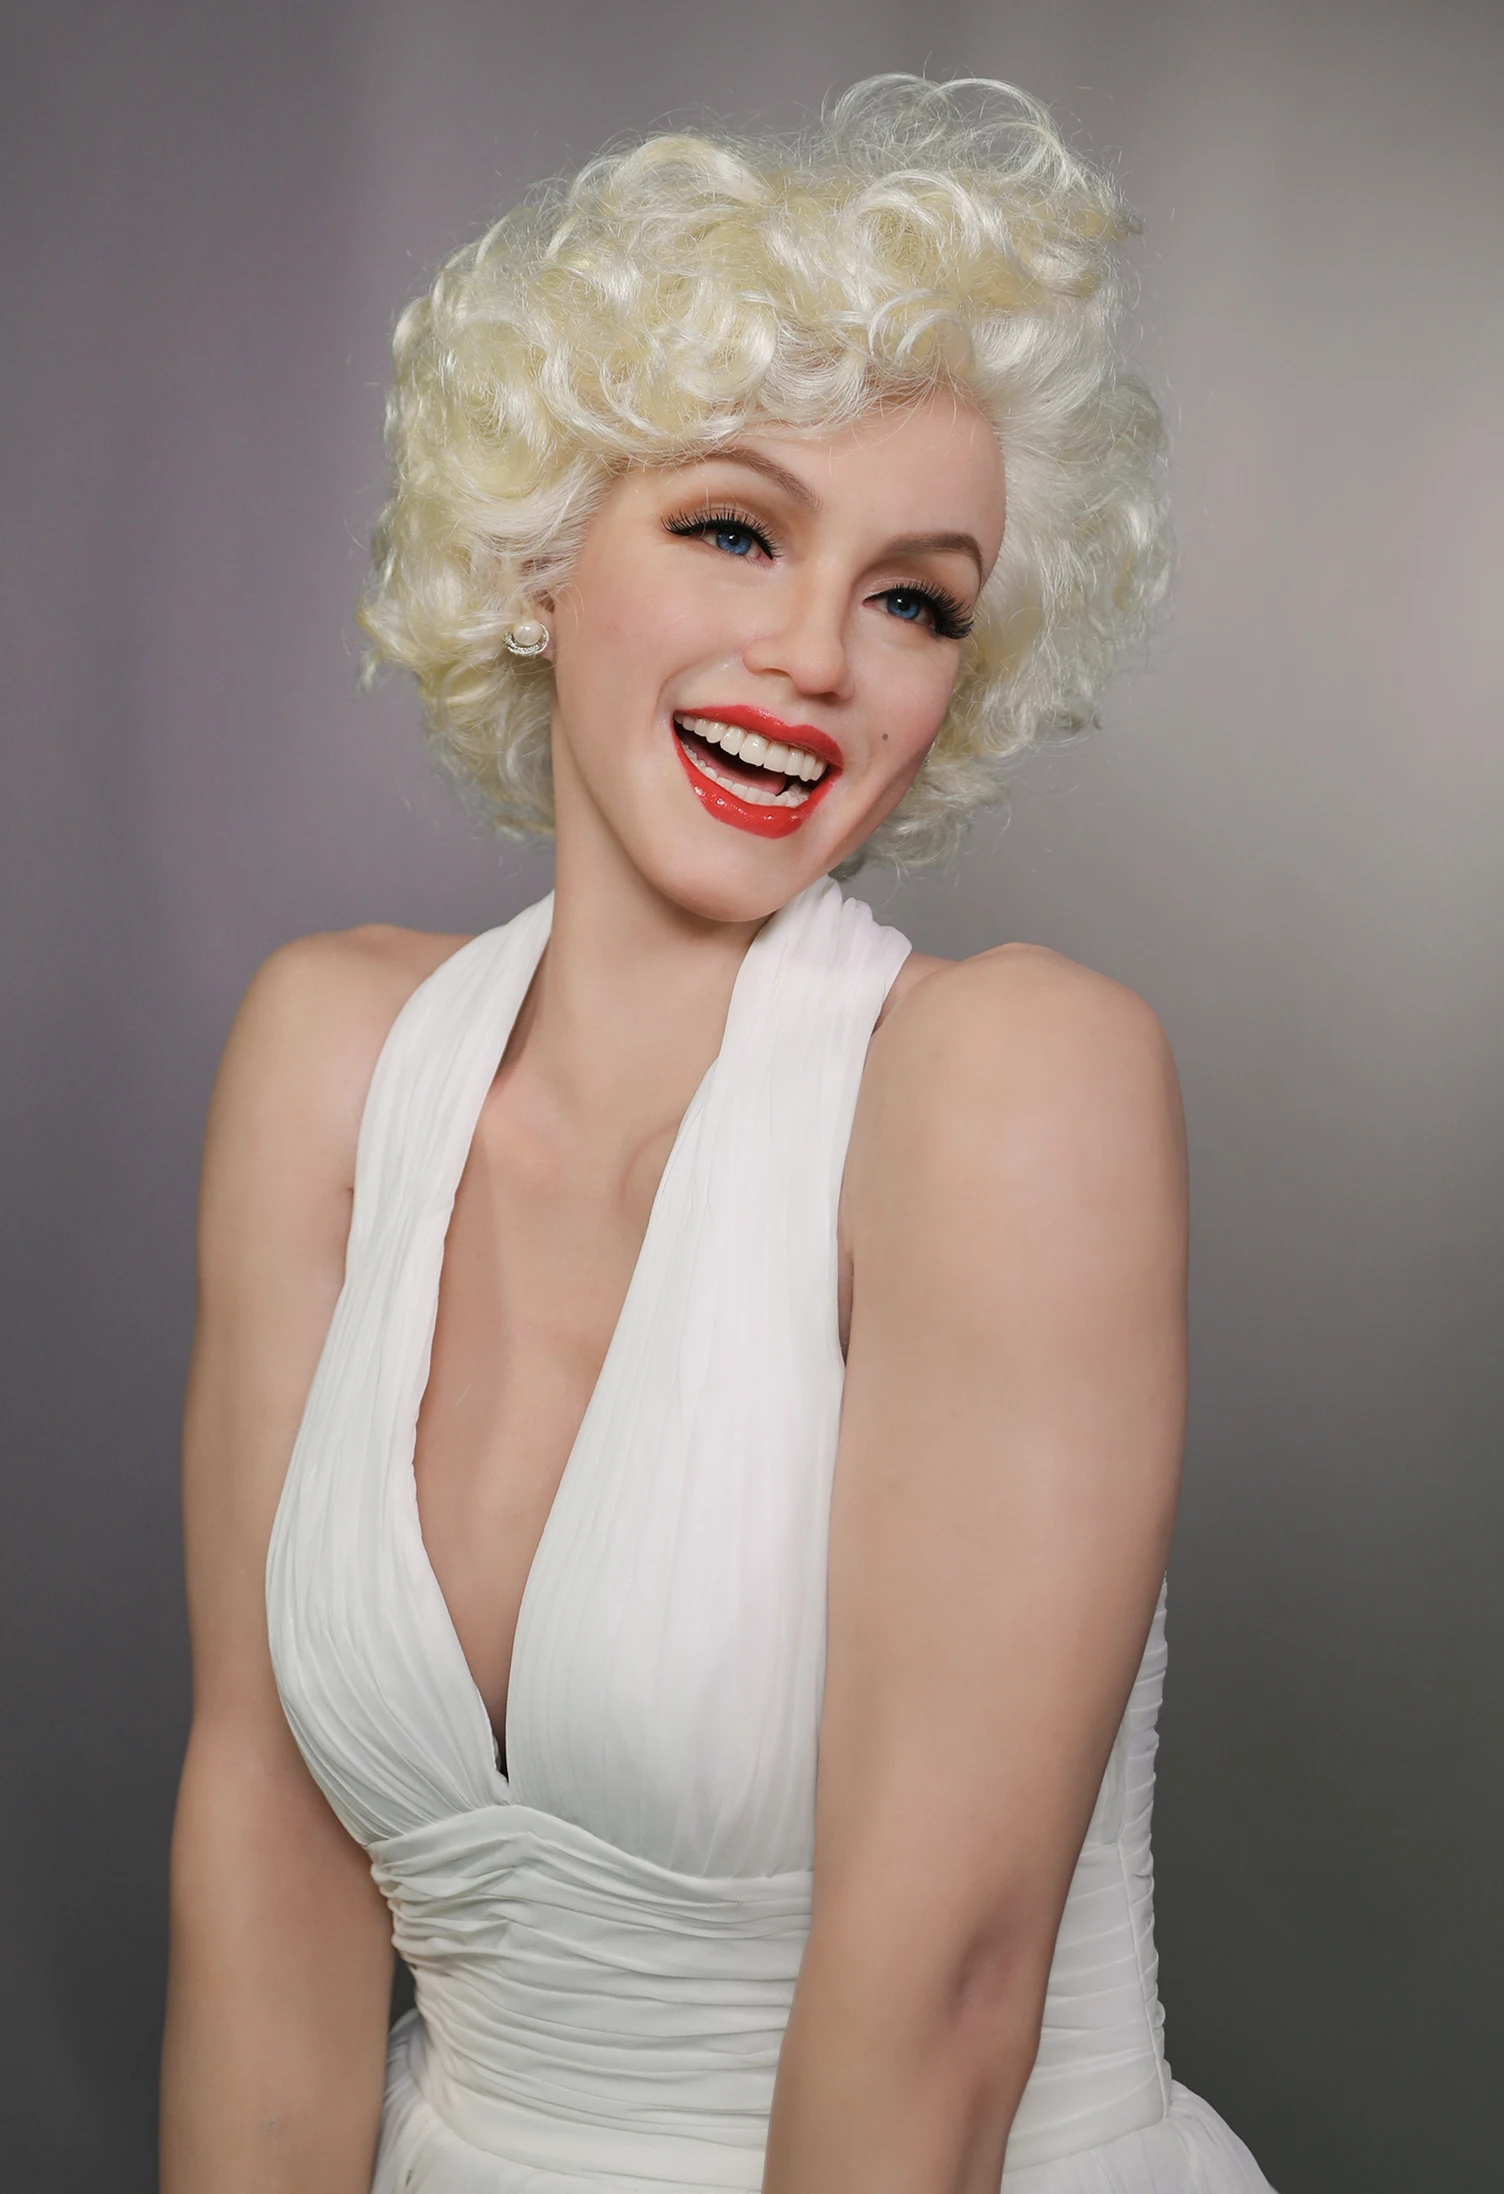 Custom Make Life Size Marilyn Monroe Wax Figure For Sale Buy Wax